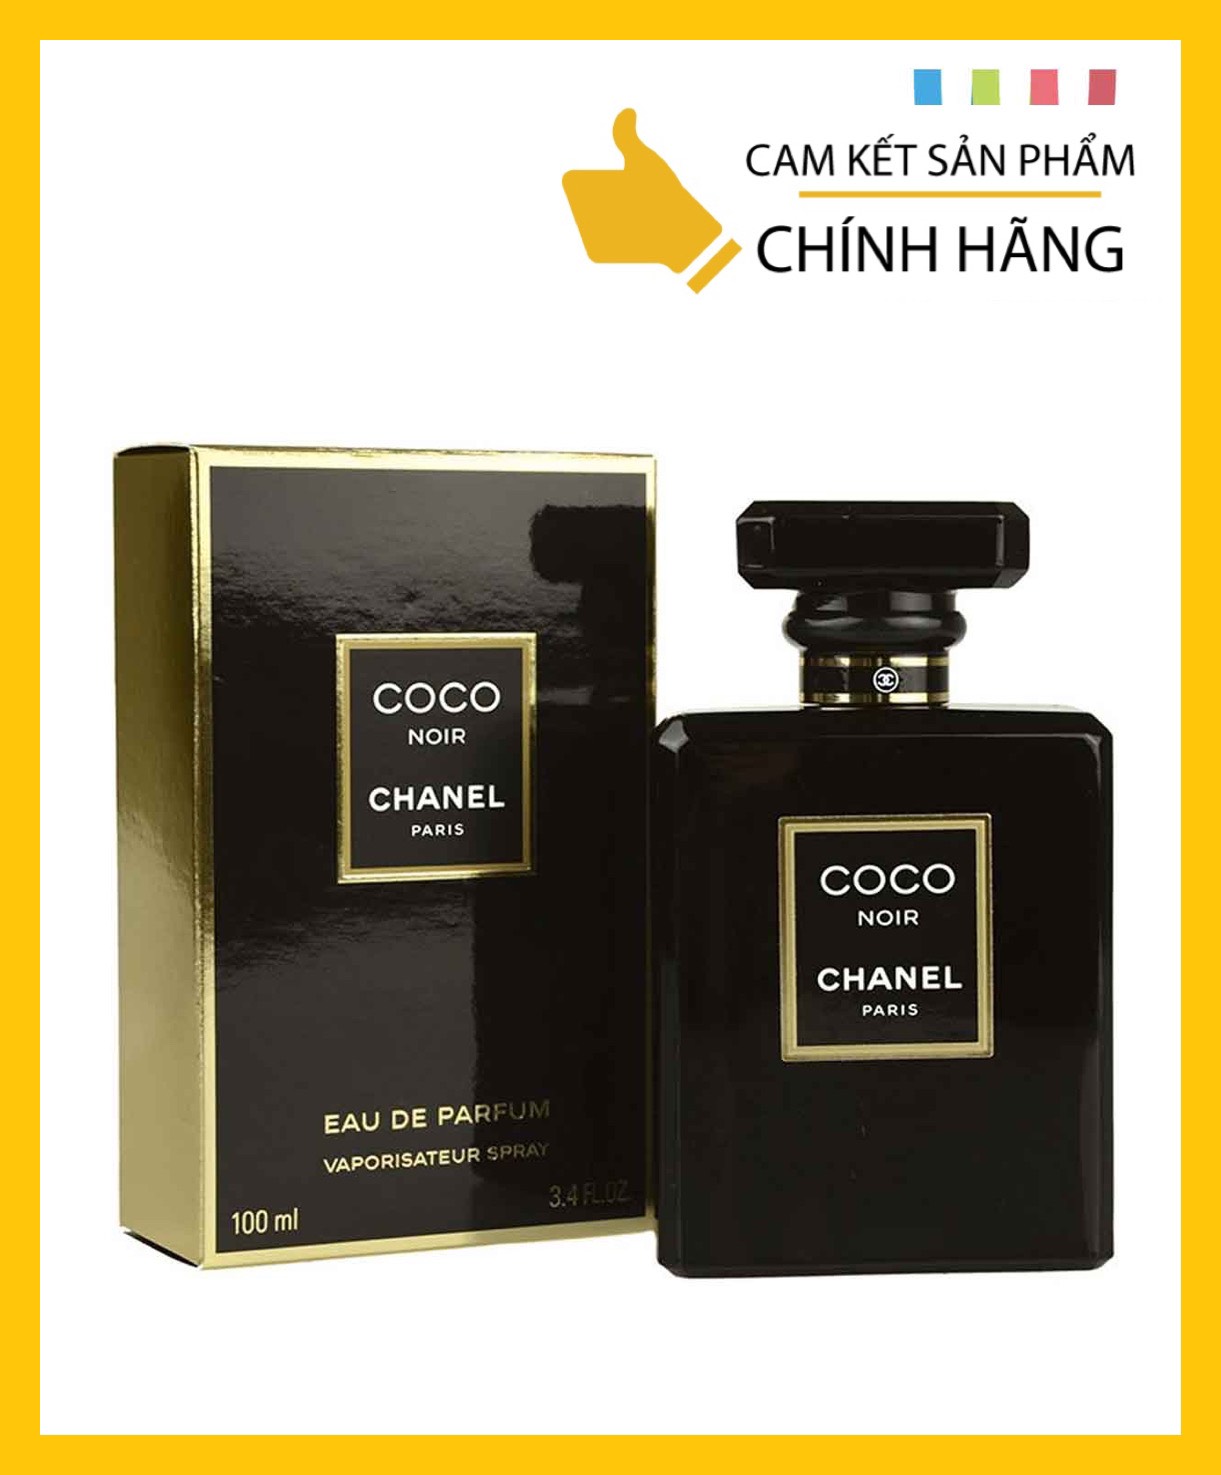 Mua Nước Hoa Chanel Coco Noir EDP Cho Nữ 100ml  Chanel  Mua tại Vua Hàng  Hiệu h003909